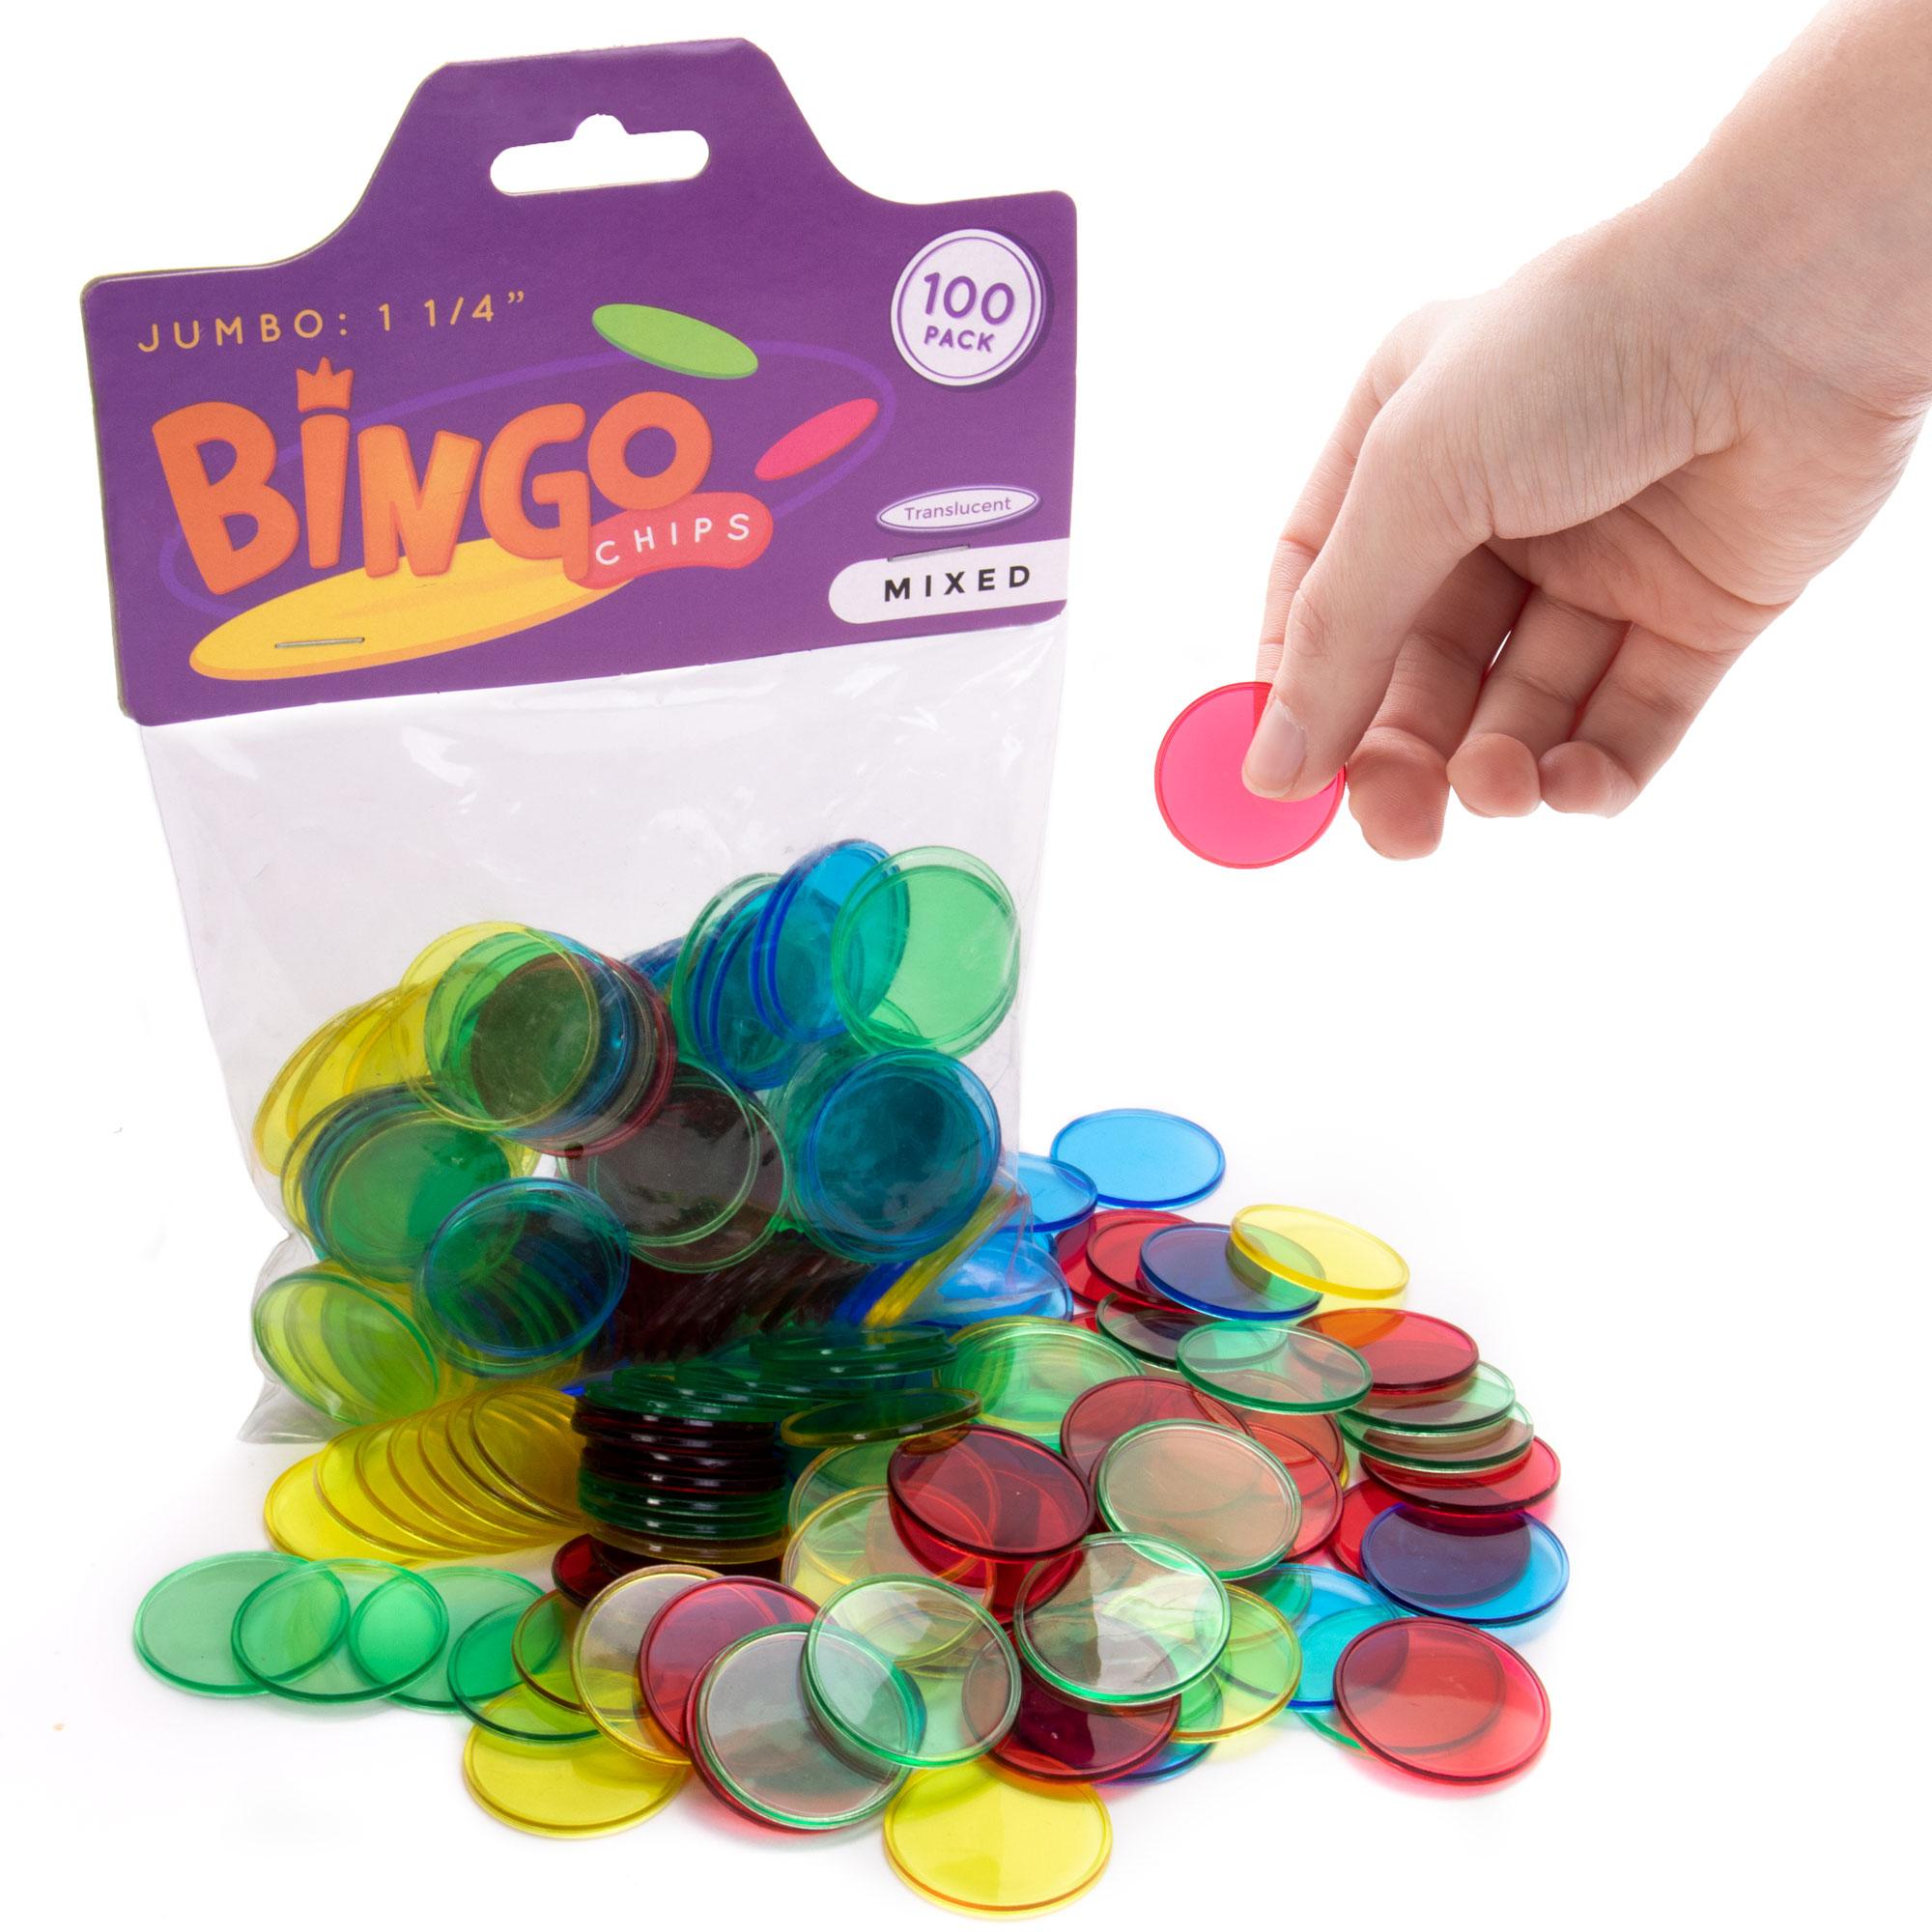 1.25" Translucent Jumbo Bingo Chips, Mixed Bag of 100 Chips